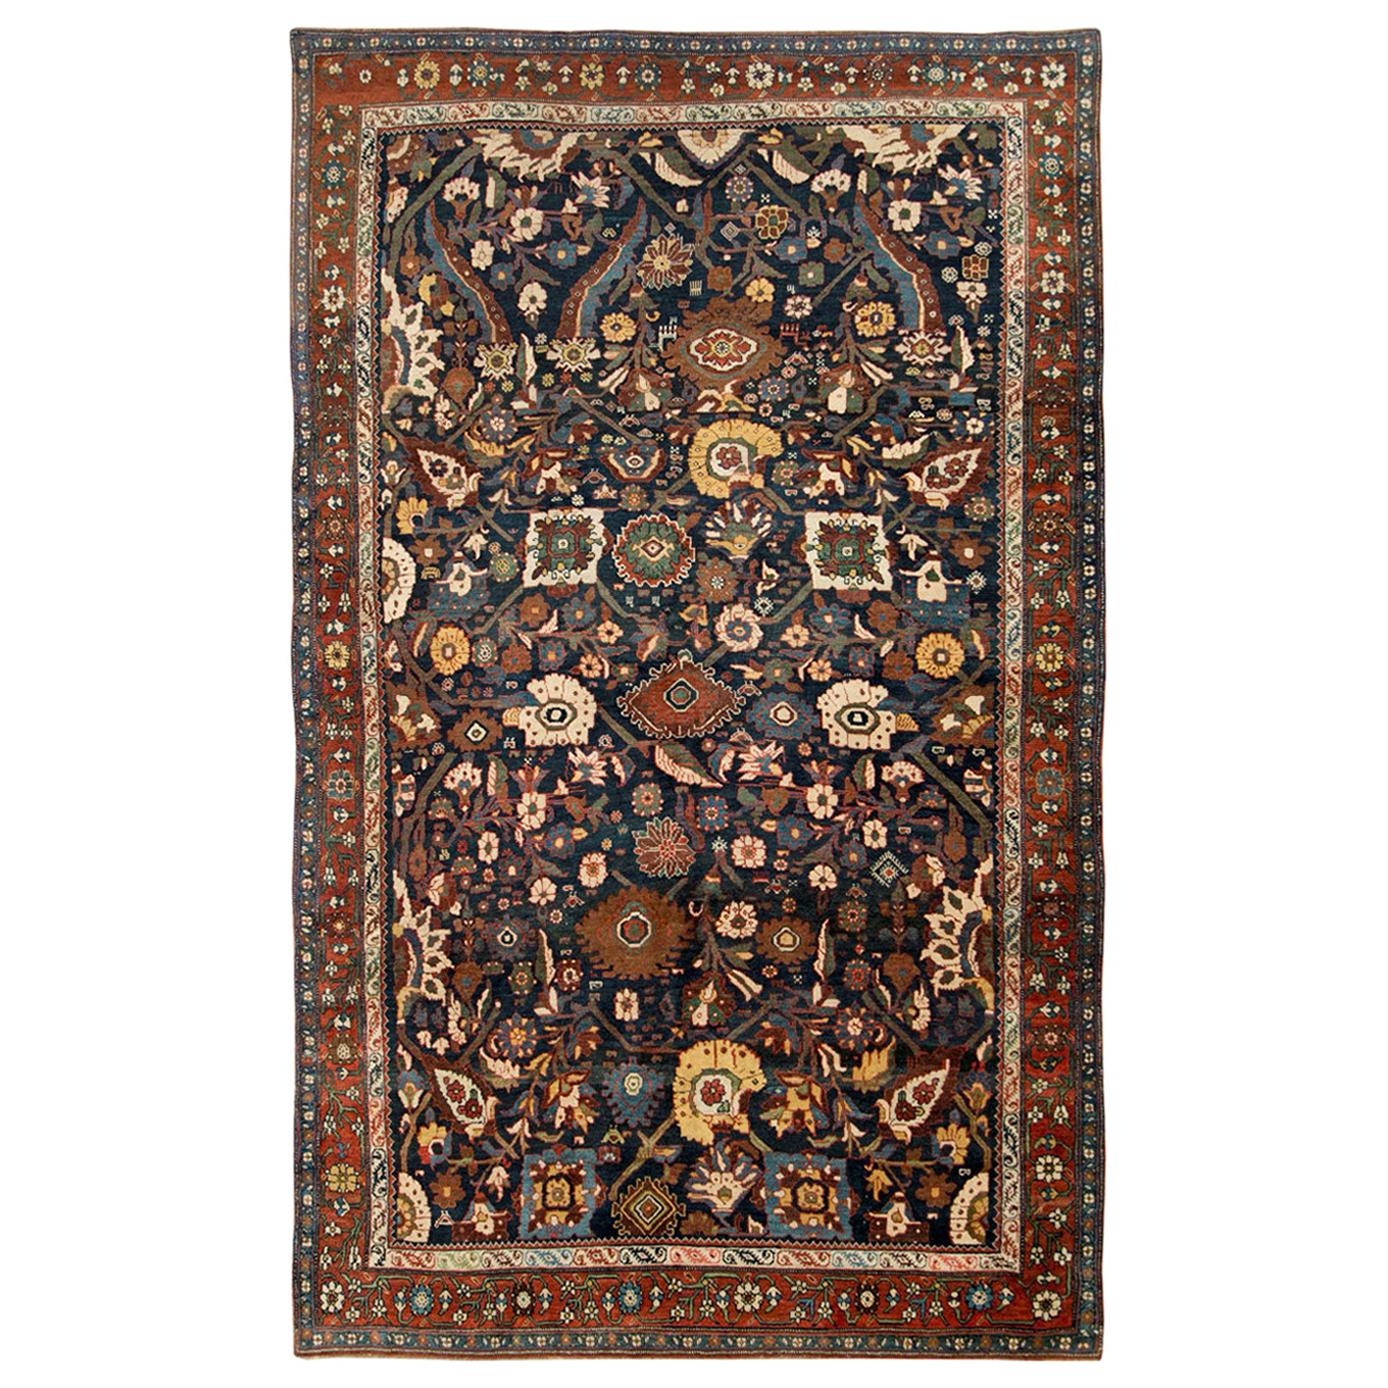 Early 20th Century Handmade Persian Bidjar Small Room Size Carpet